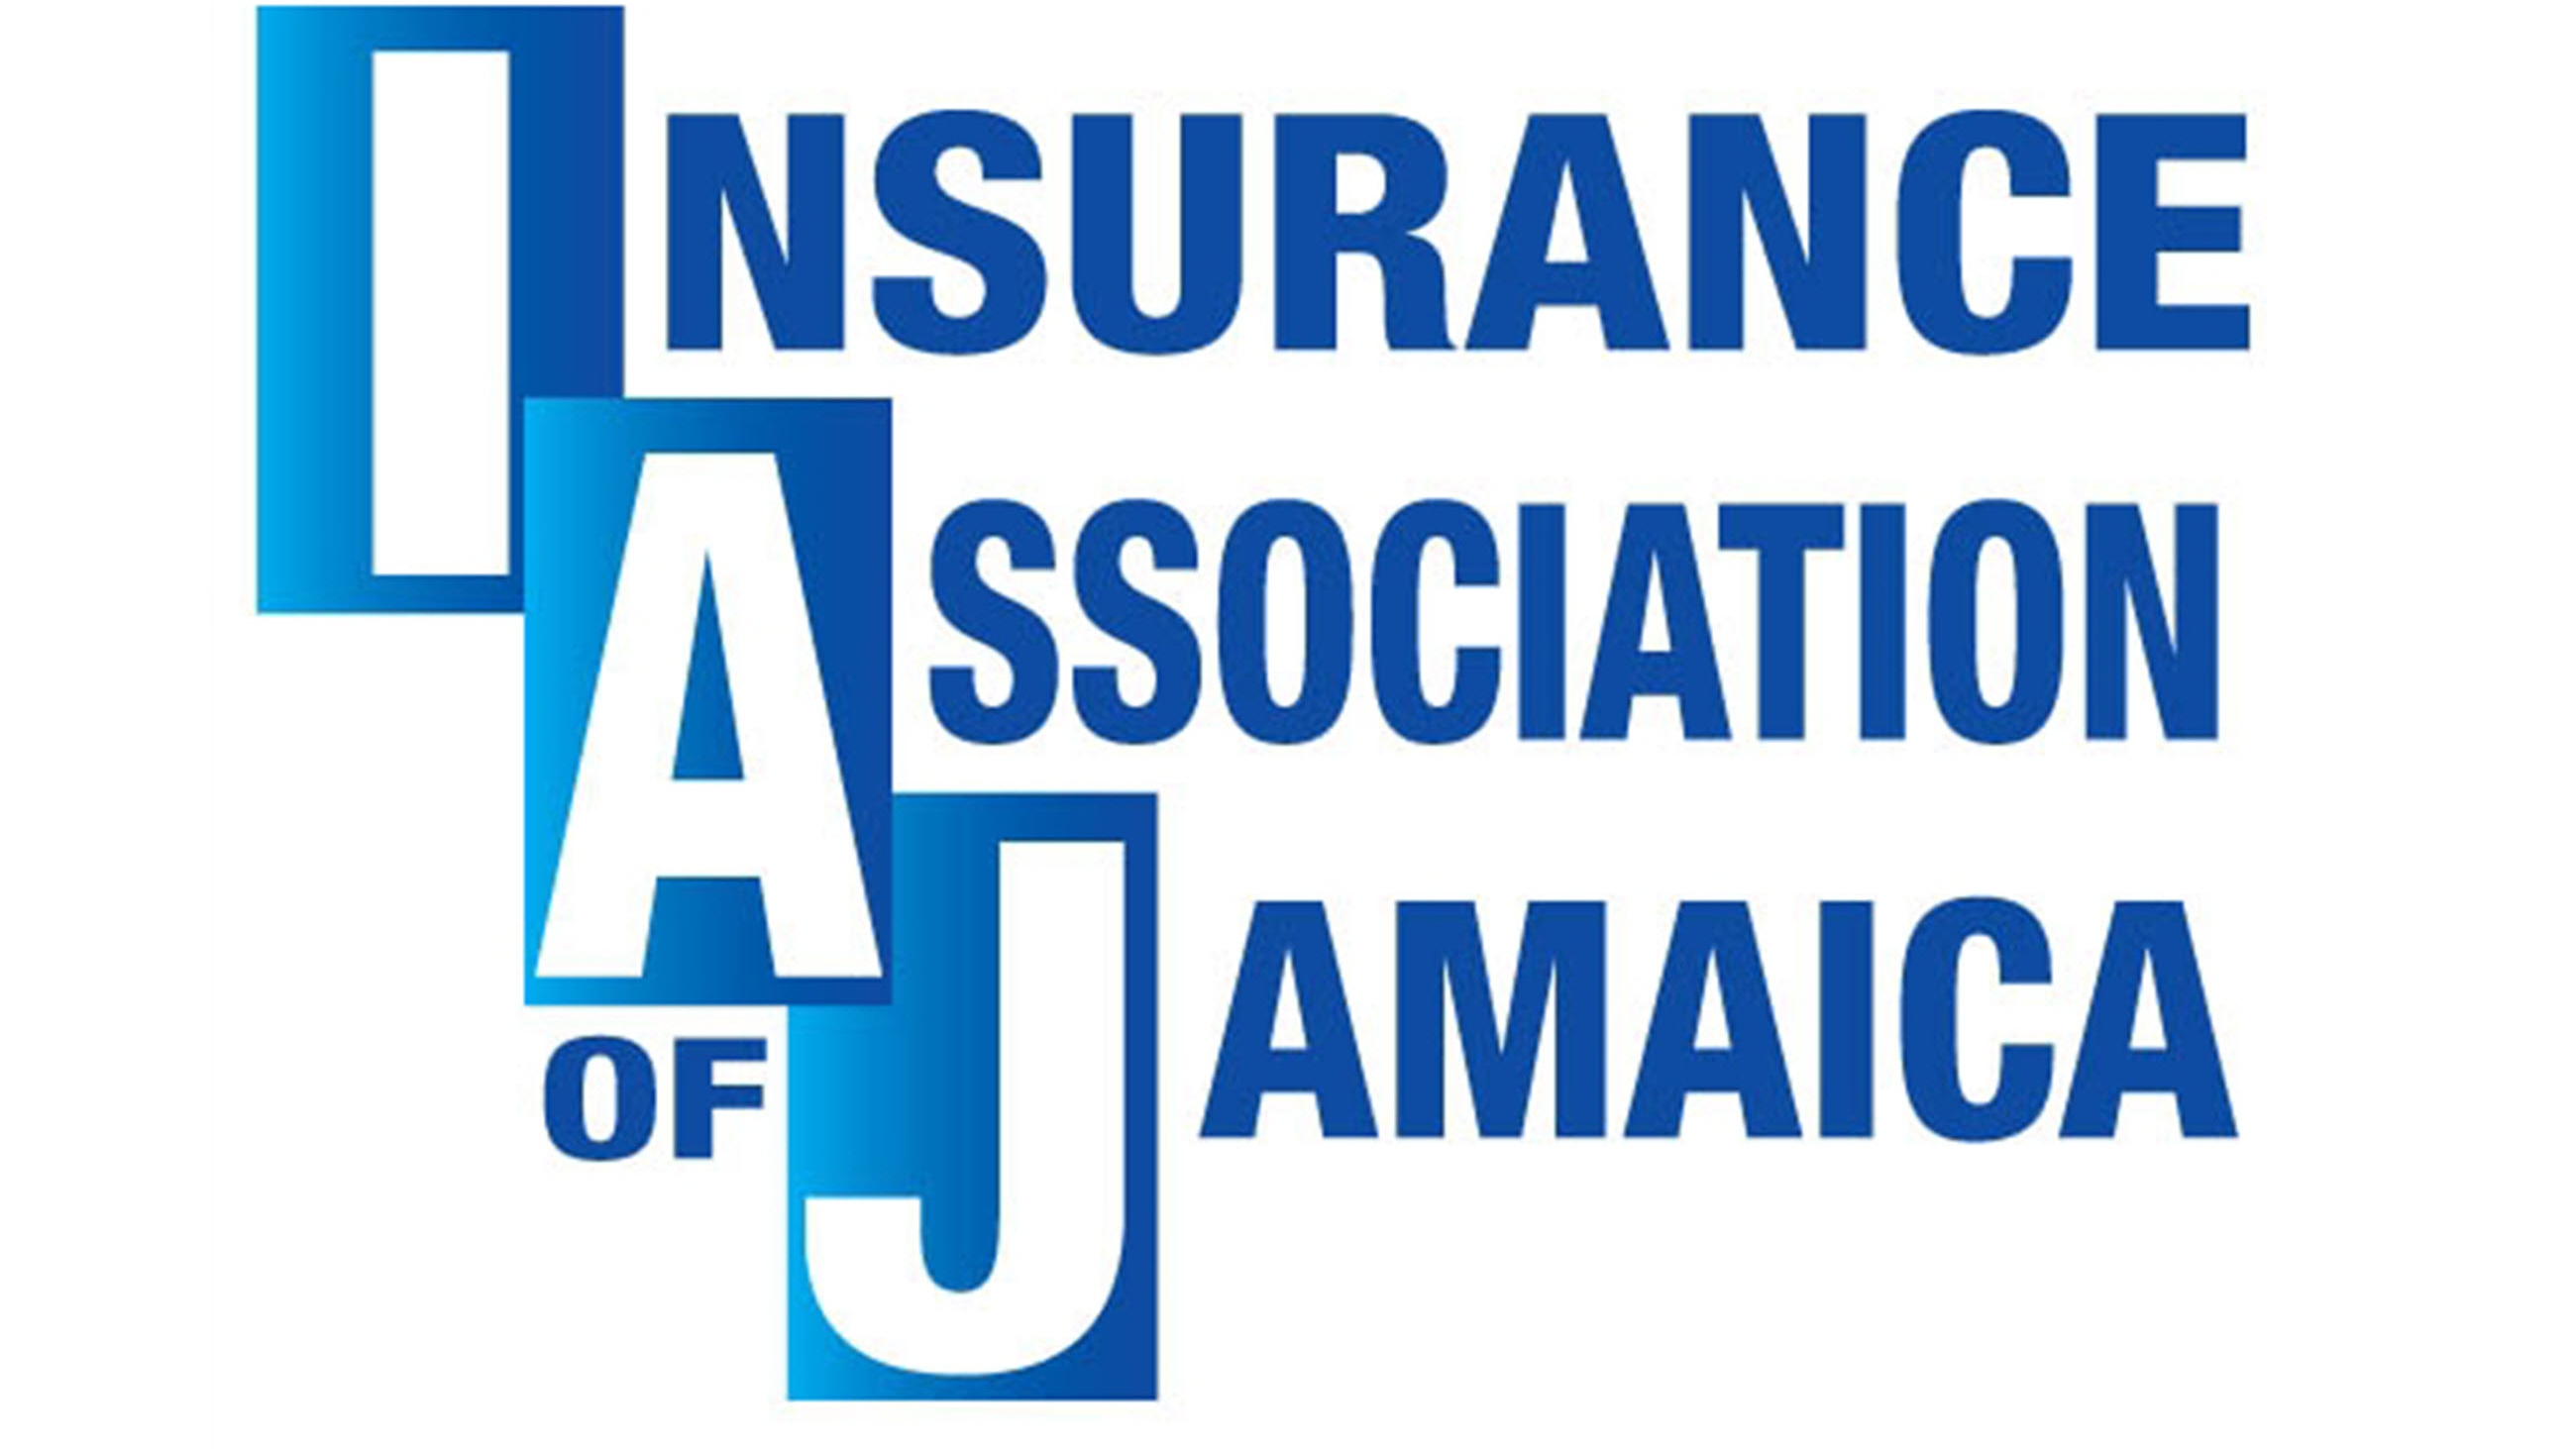 InsuranceAssociationJamaica